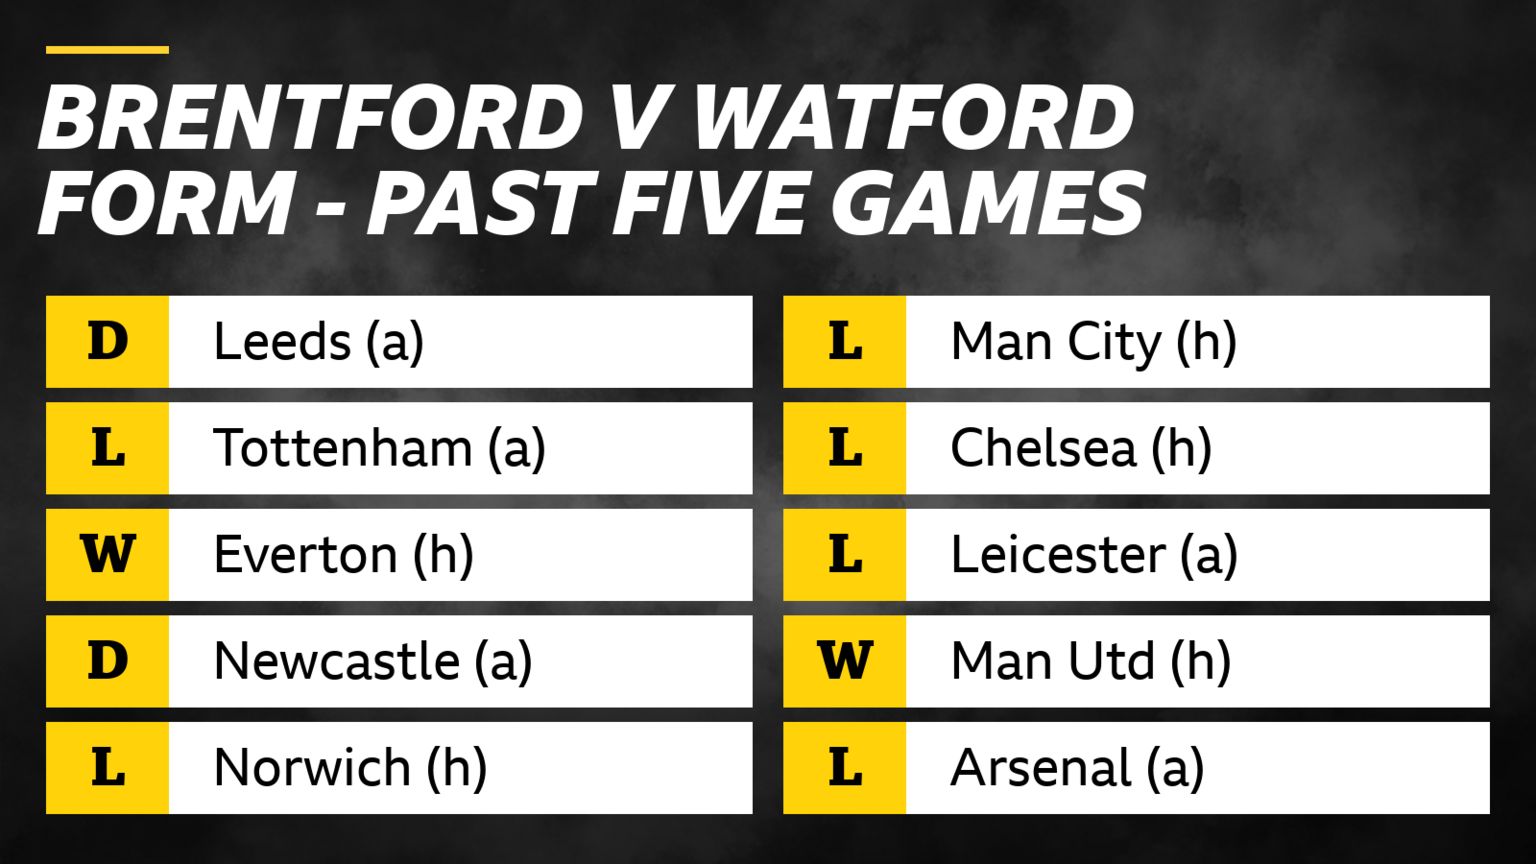 Brentford v Watford – form in past five games: Brentford – D Leeds (a),  L Tottenham (a),  W Everton (h),  D Newcastle (a), L Norwich (h). Watford - L	Man City (h), L Chelsea (h), L Leicester (a), W Man Utd (h), L Arsenal (a).